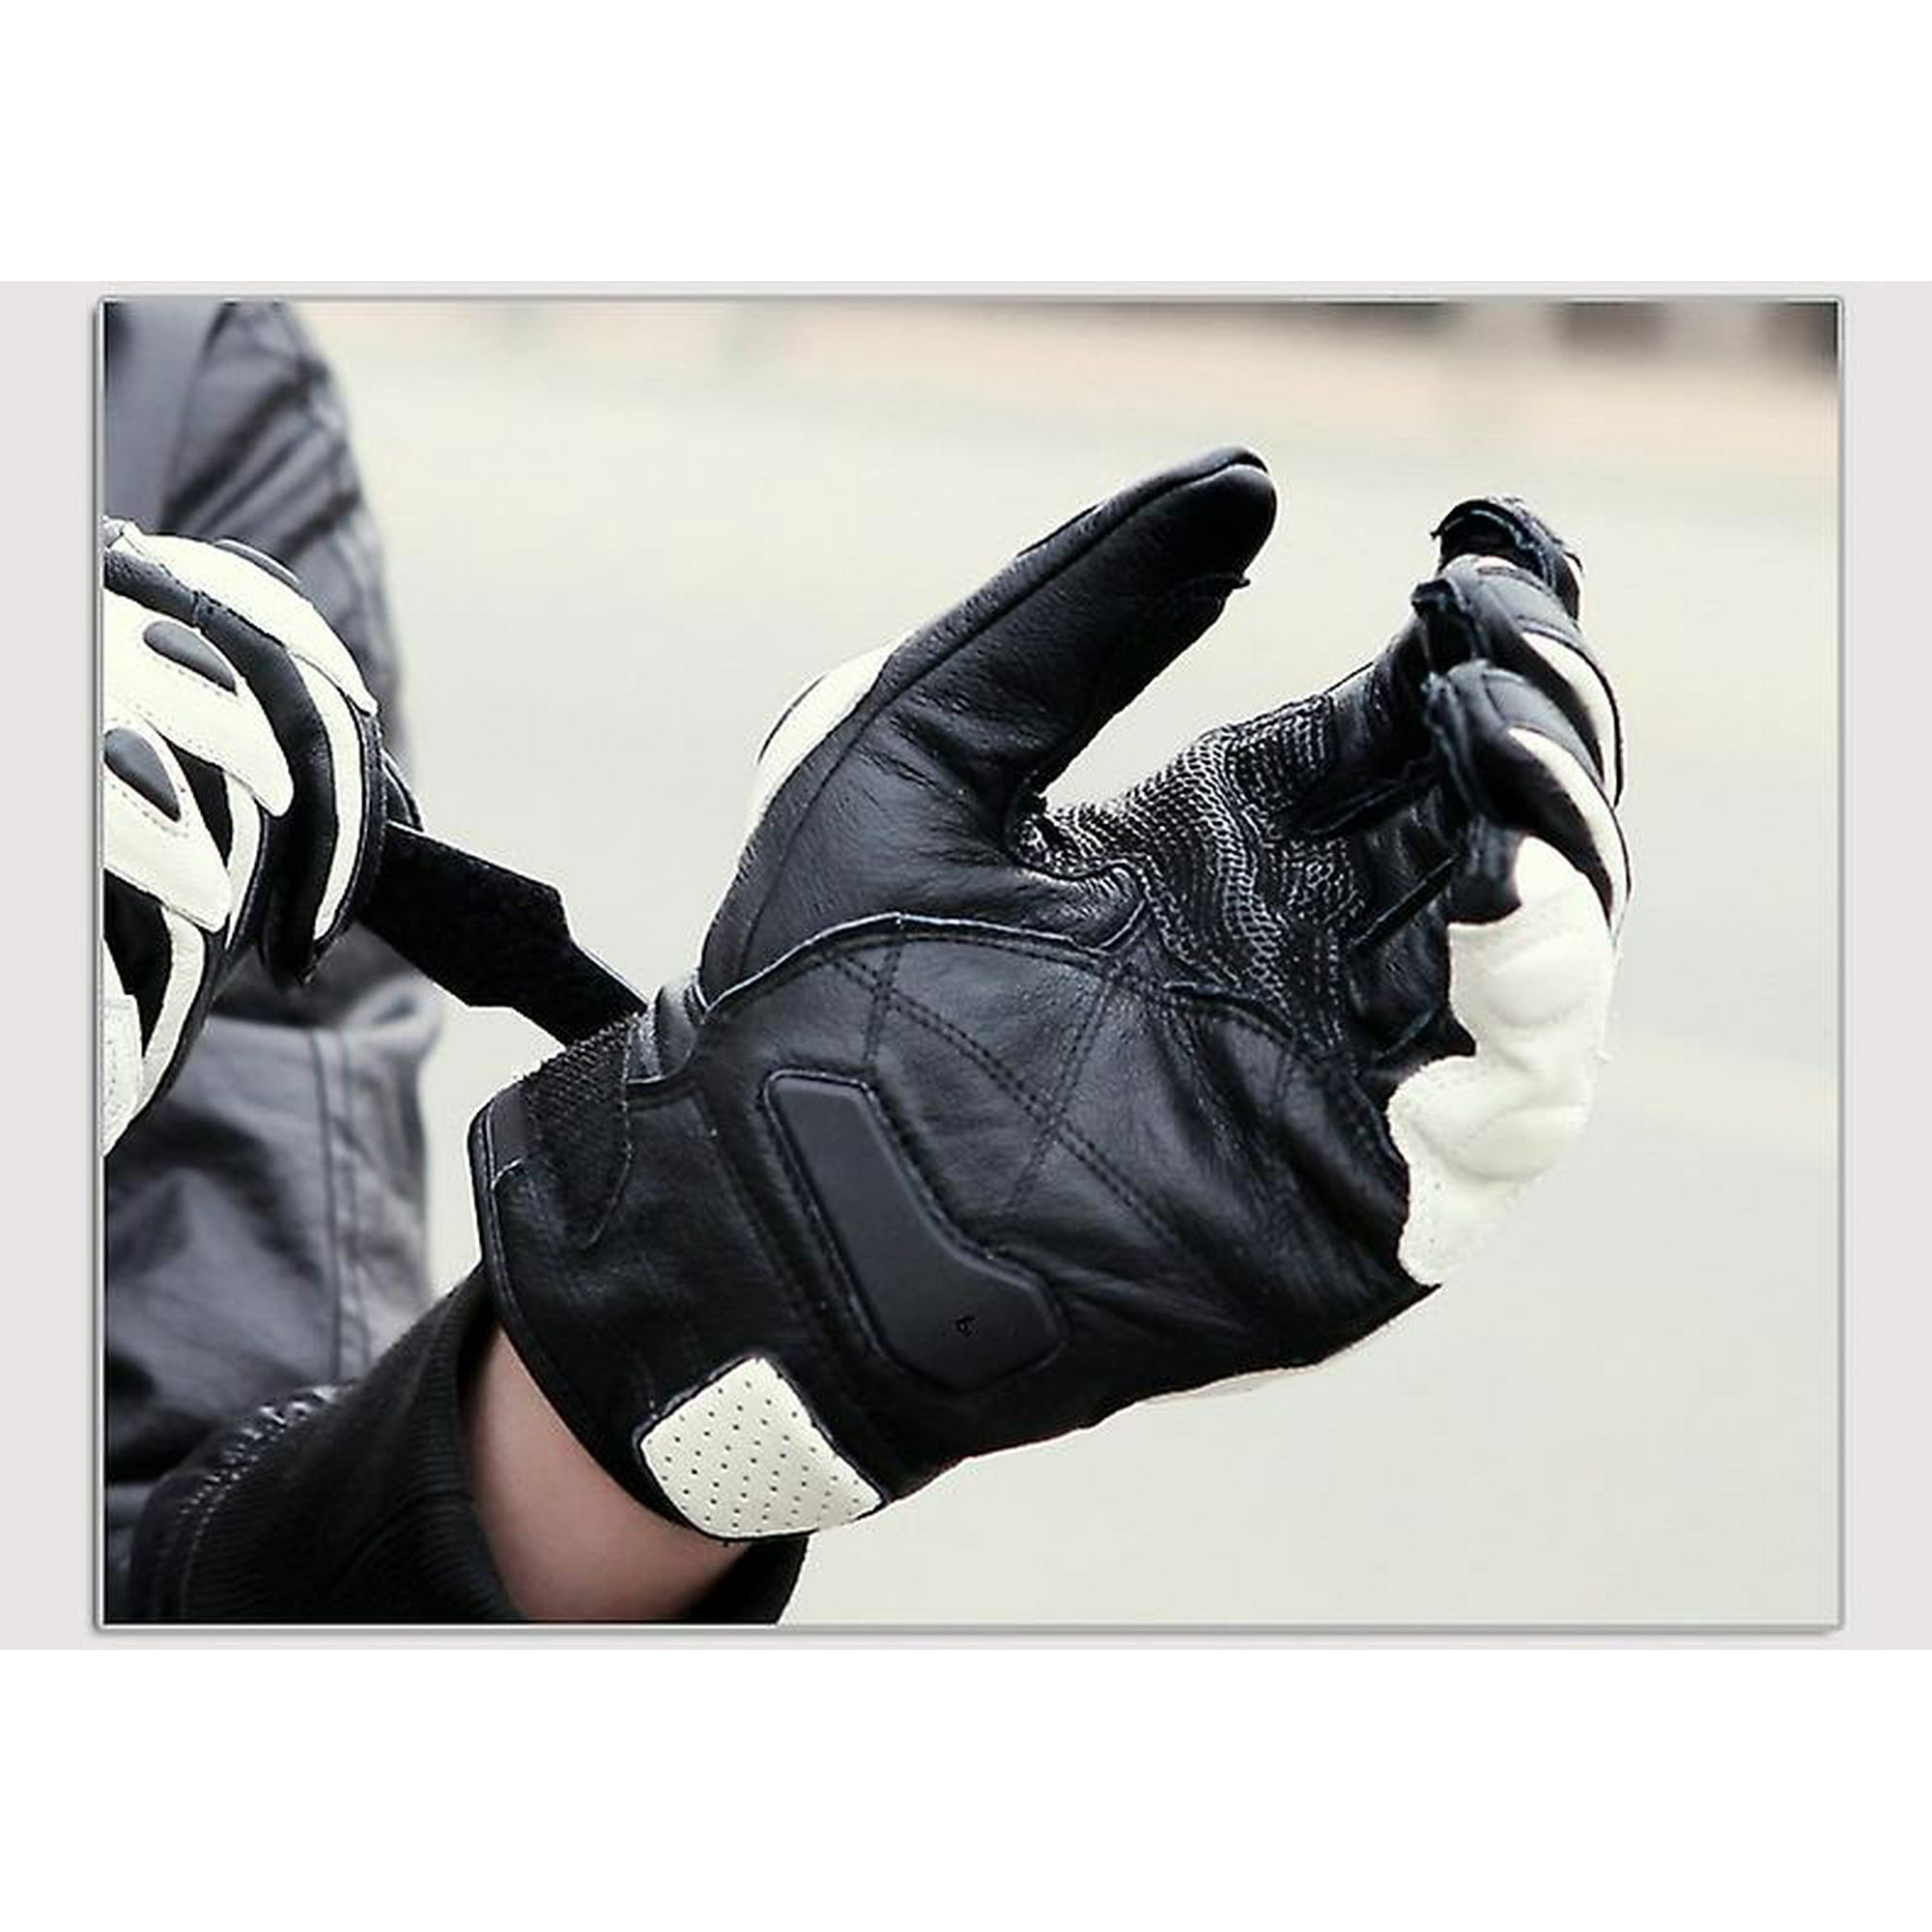 MRX BOXING & FITNESS Guantes de motocicleta para hombre, guantes de cuero  para clima frío, guantes de invierno para hombre, color negro